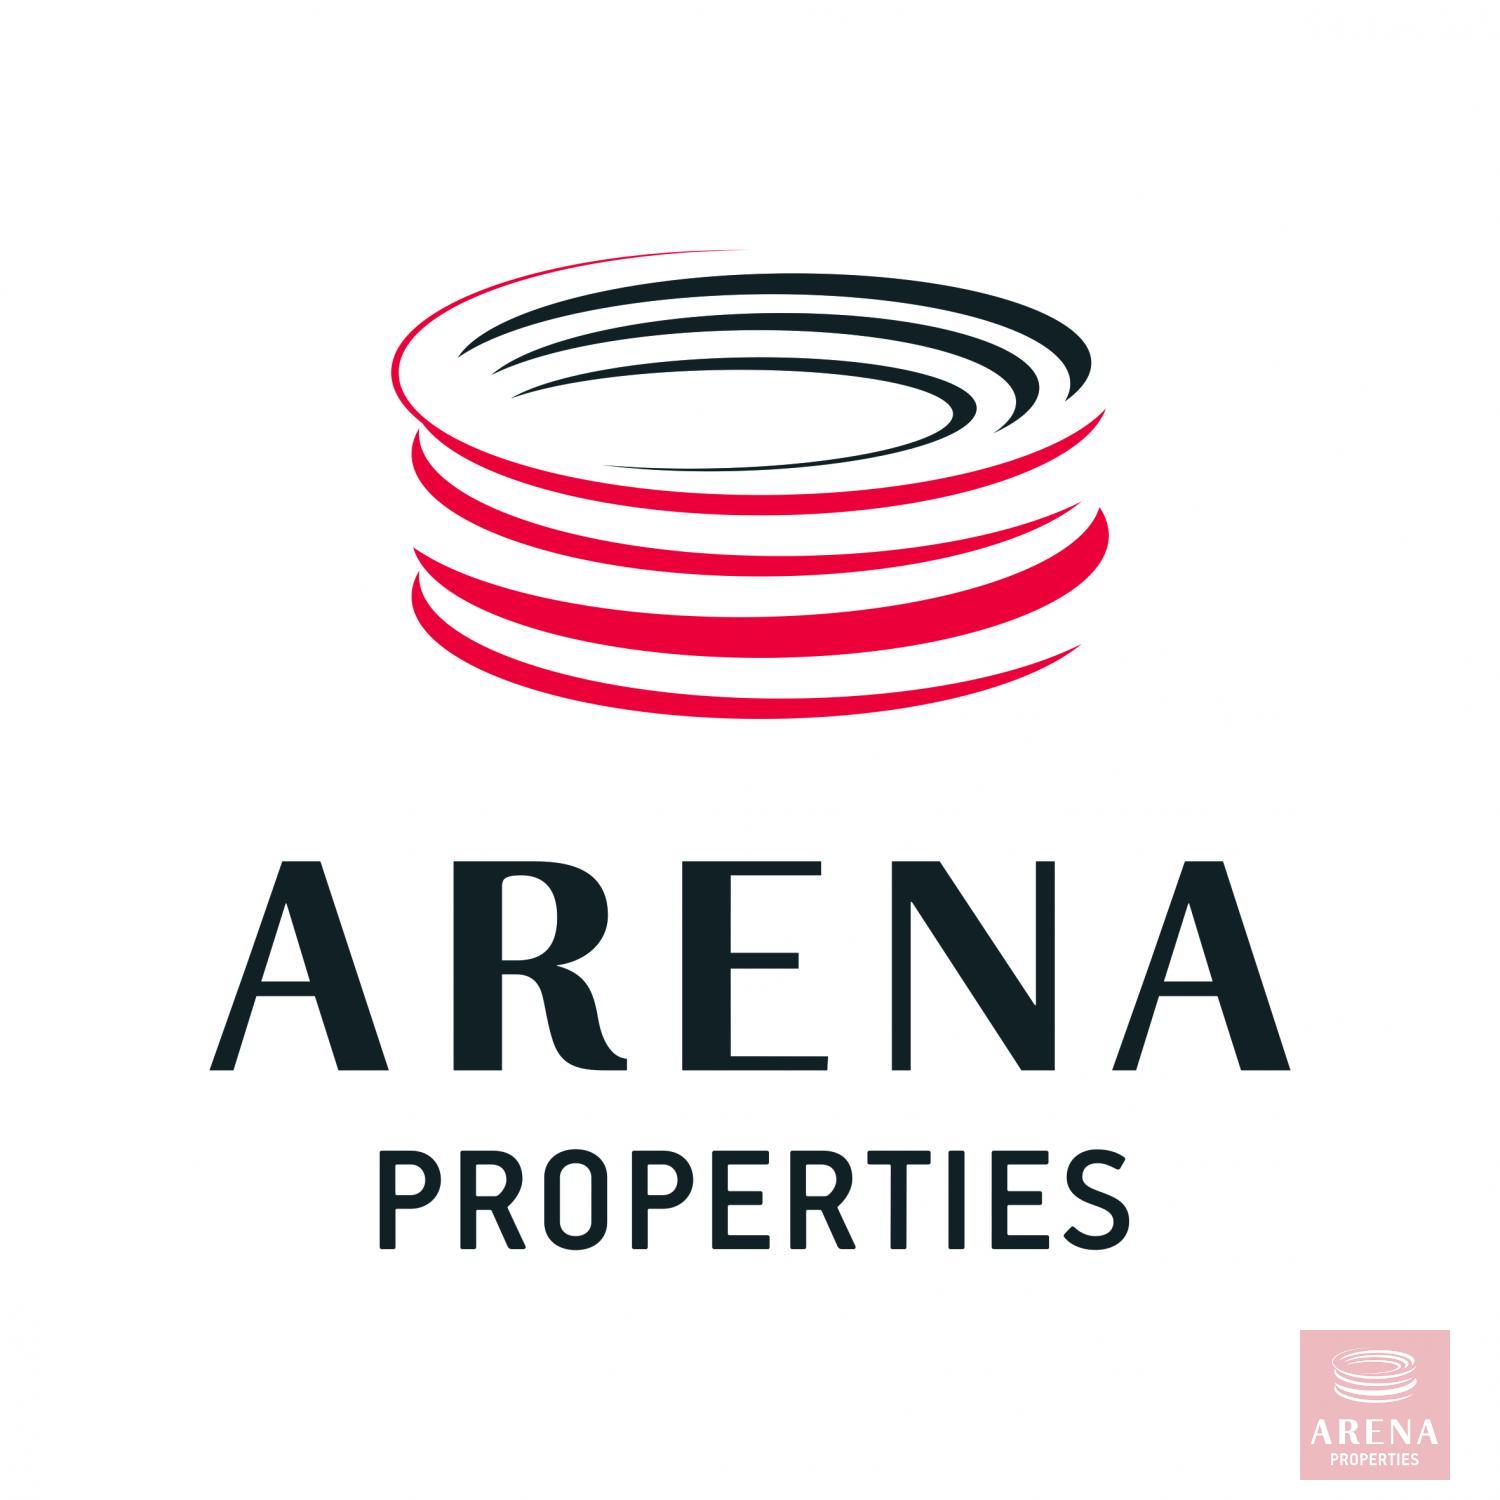 arena properties logo white 4